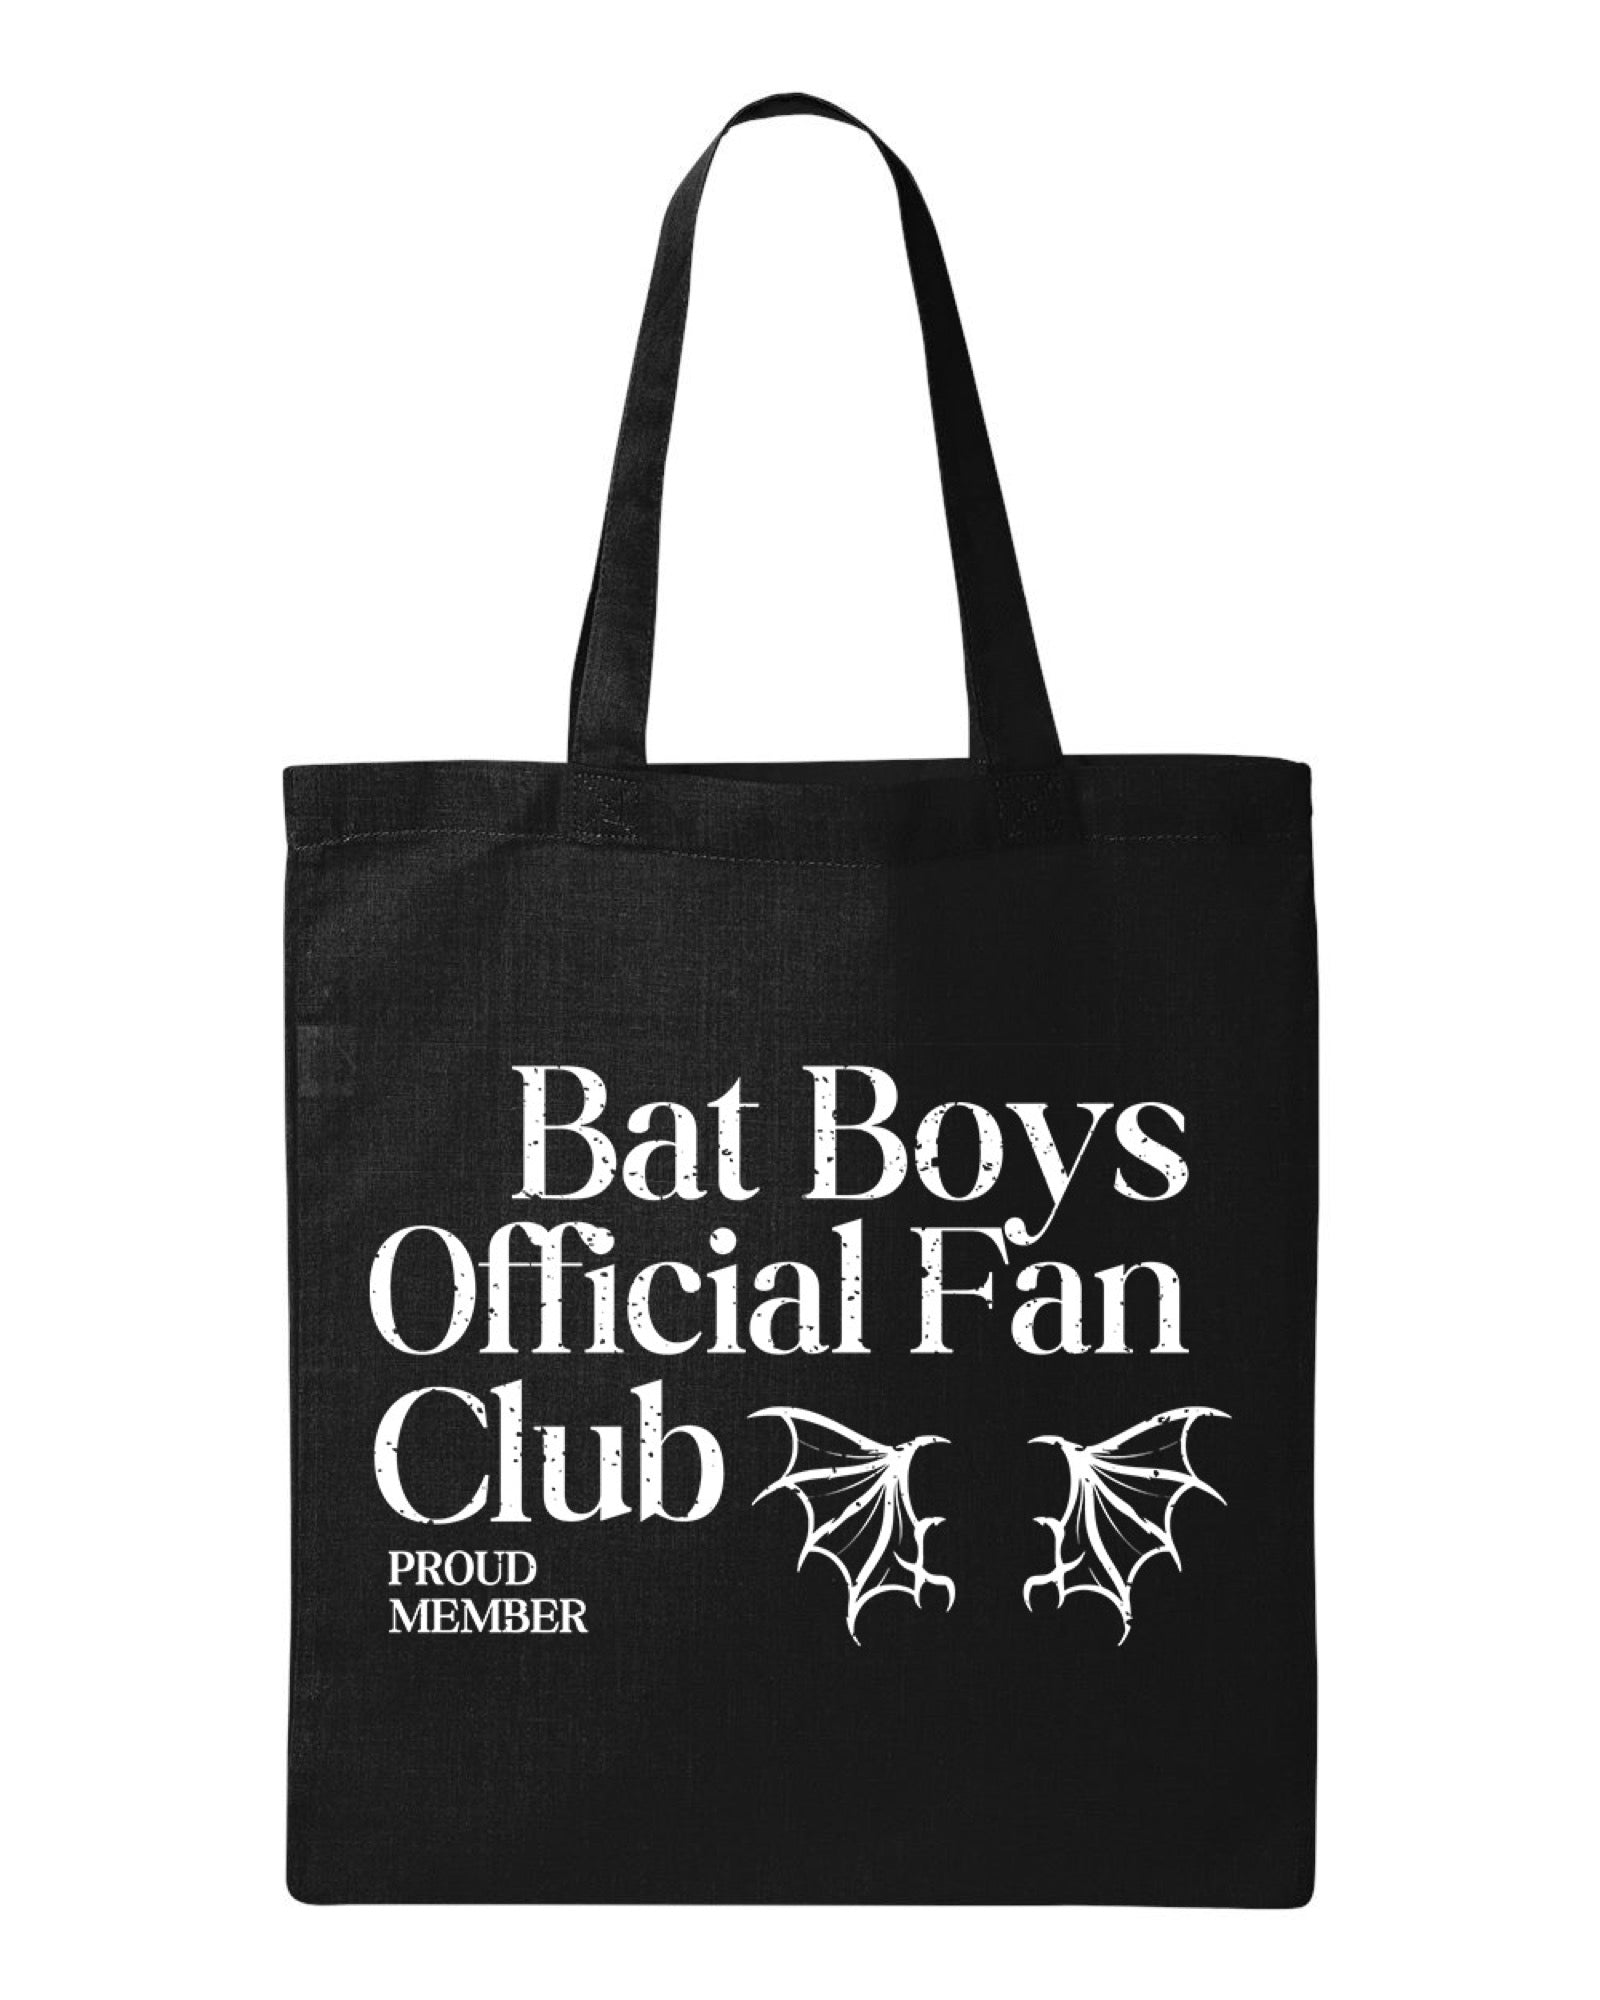 Bat Boys Official Fan Club Tote